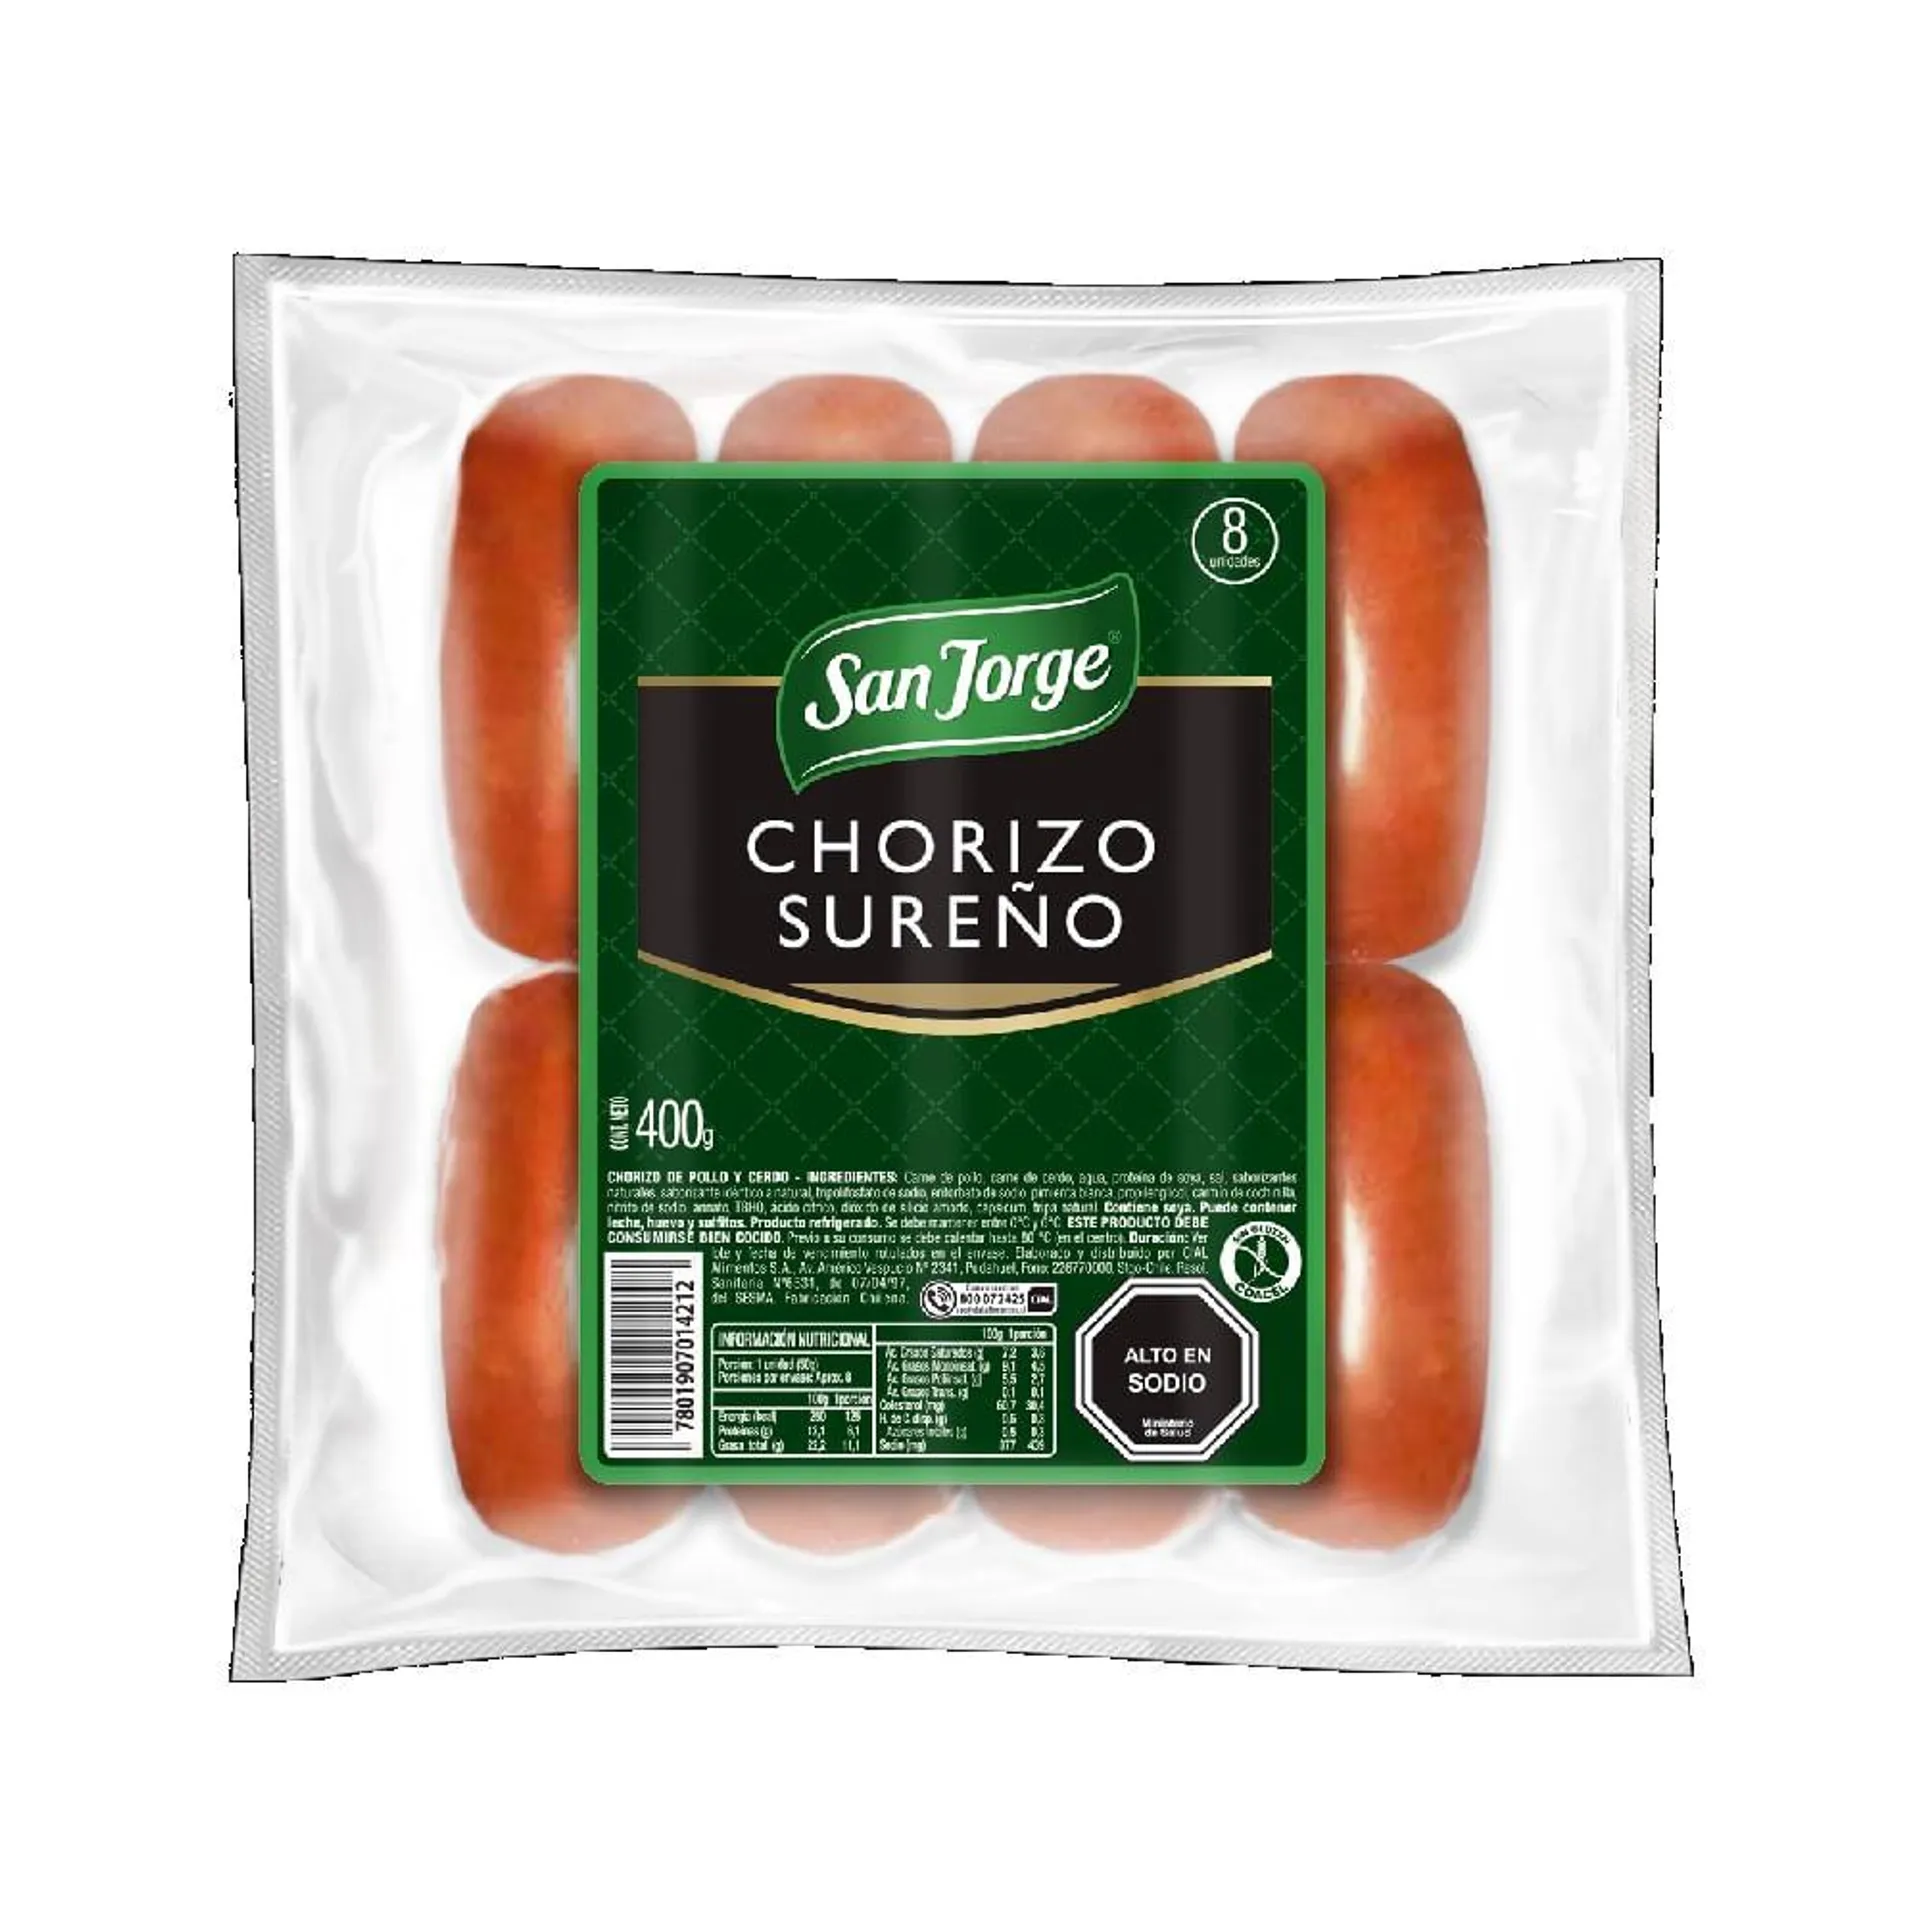 Chorizo sureño San Jorge 8 un